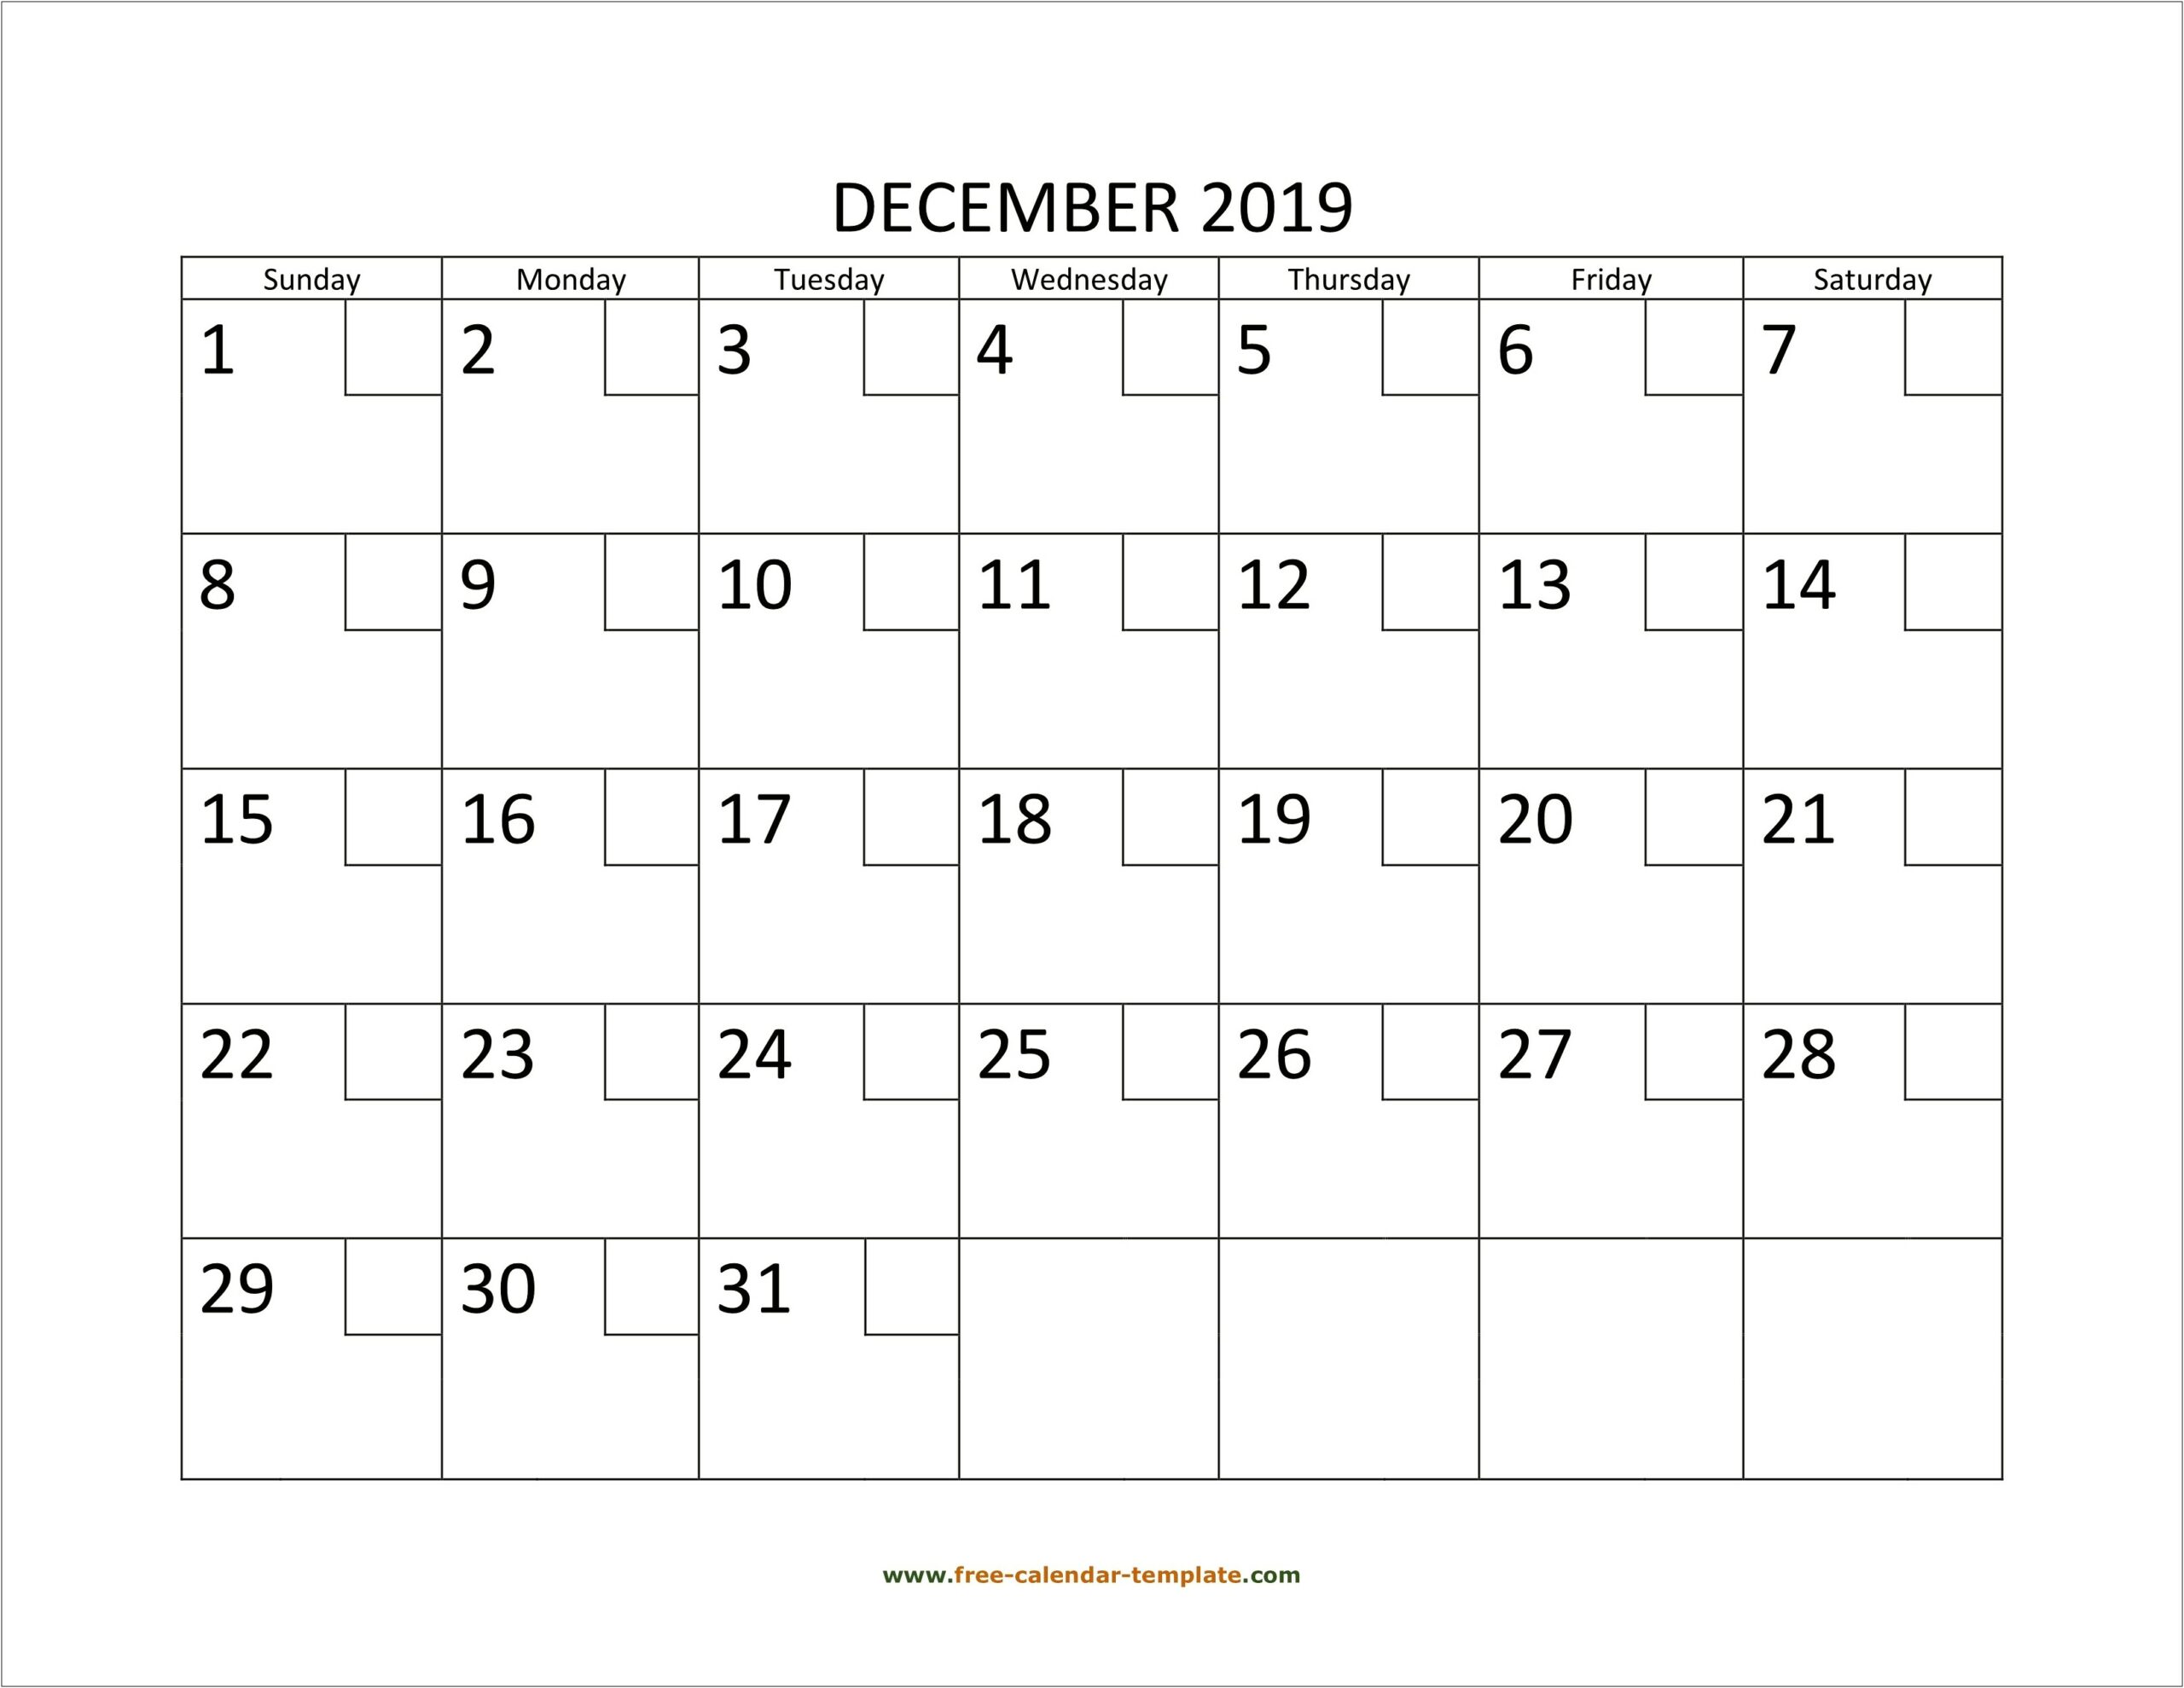 December 2019 Calendar Free Printable Template